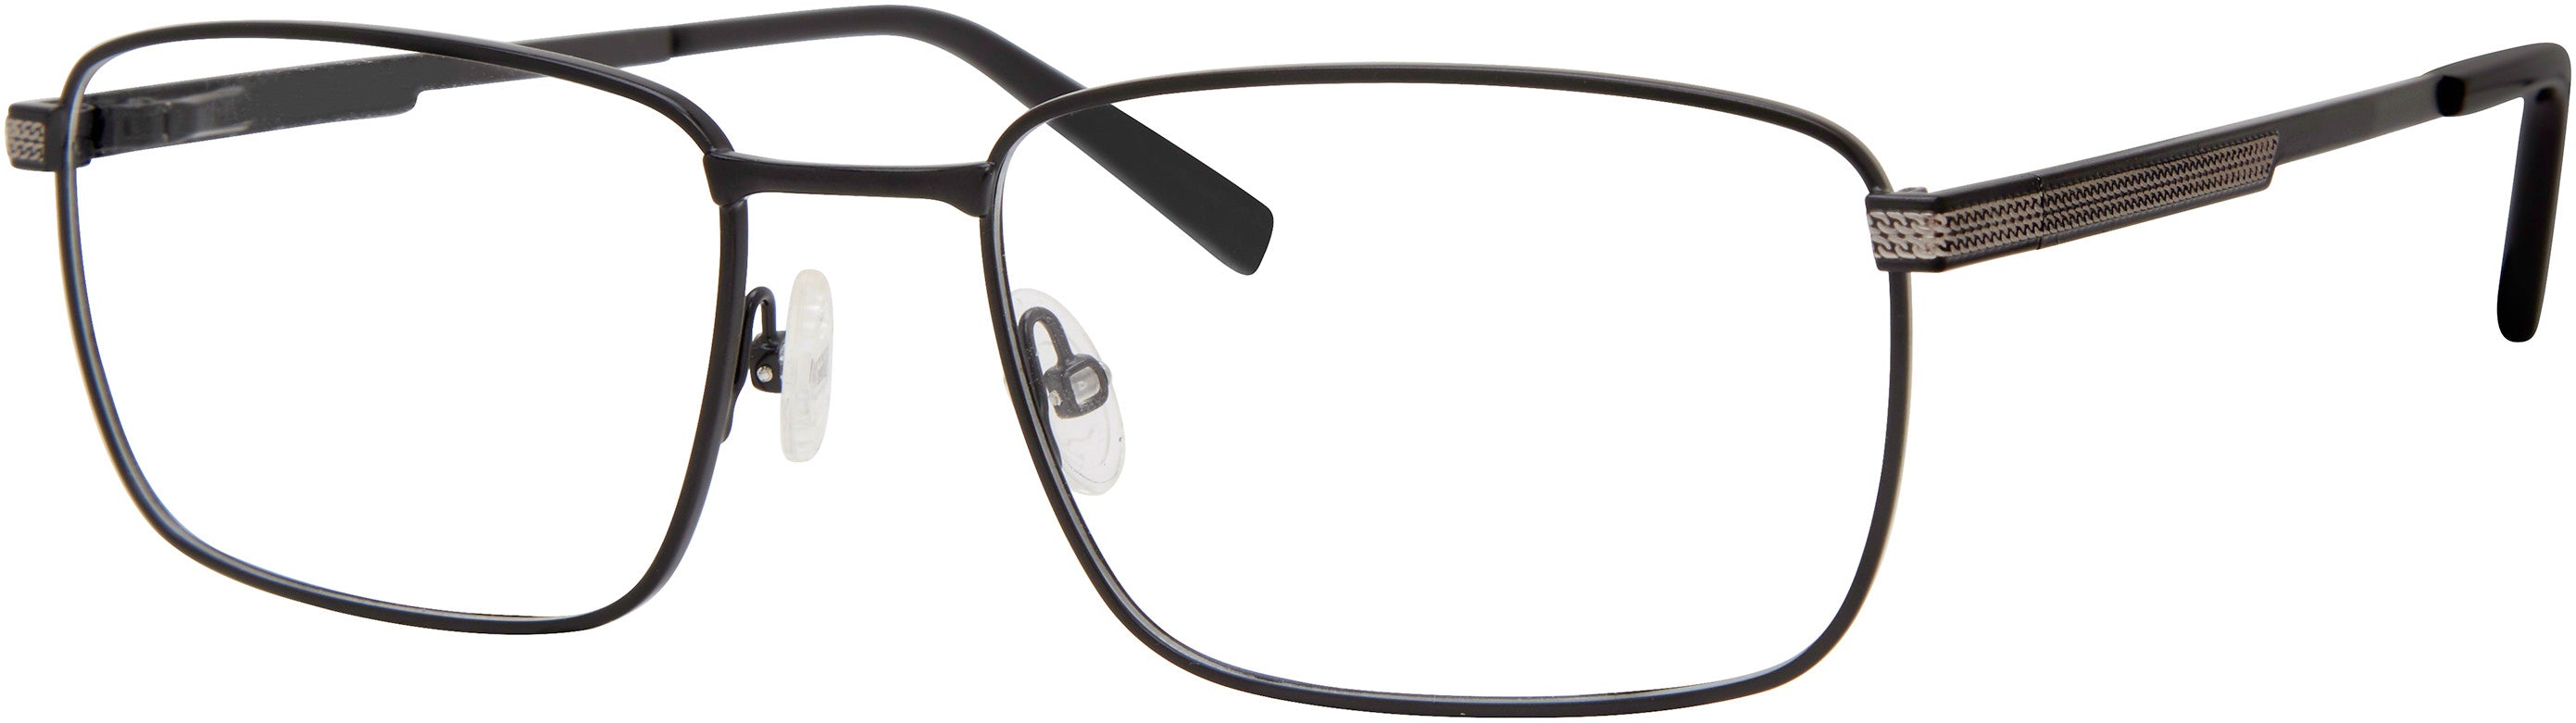  Claiborne 249 Rectangular Eyeglasses 0003-0003  Matte Black (00 Demo Lens)